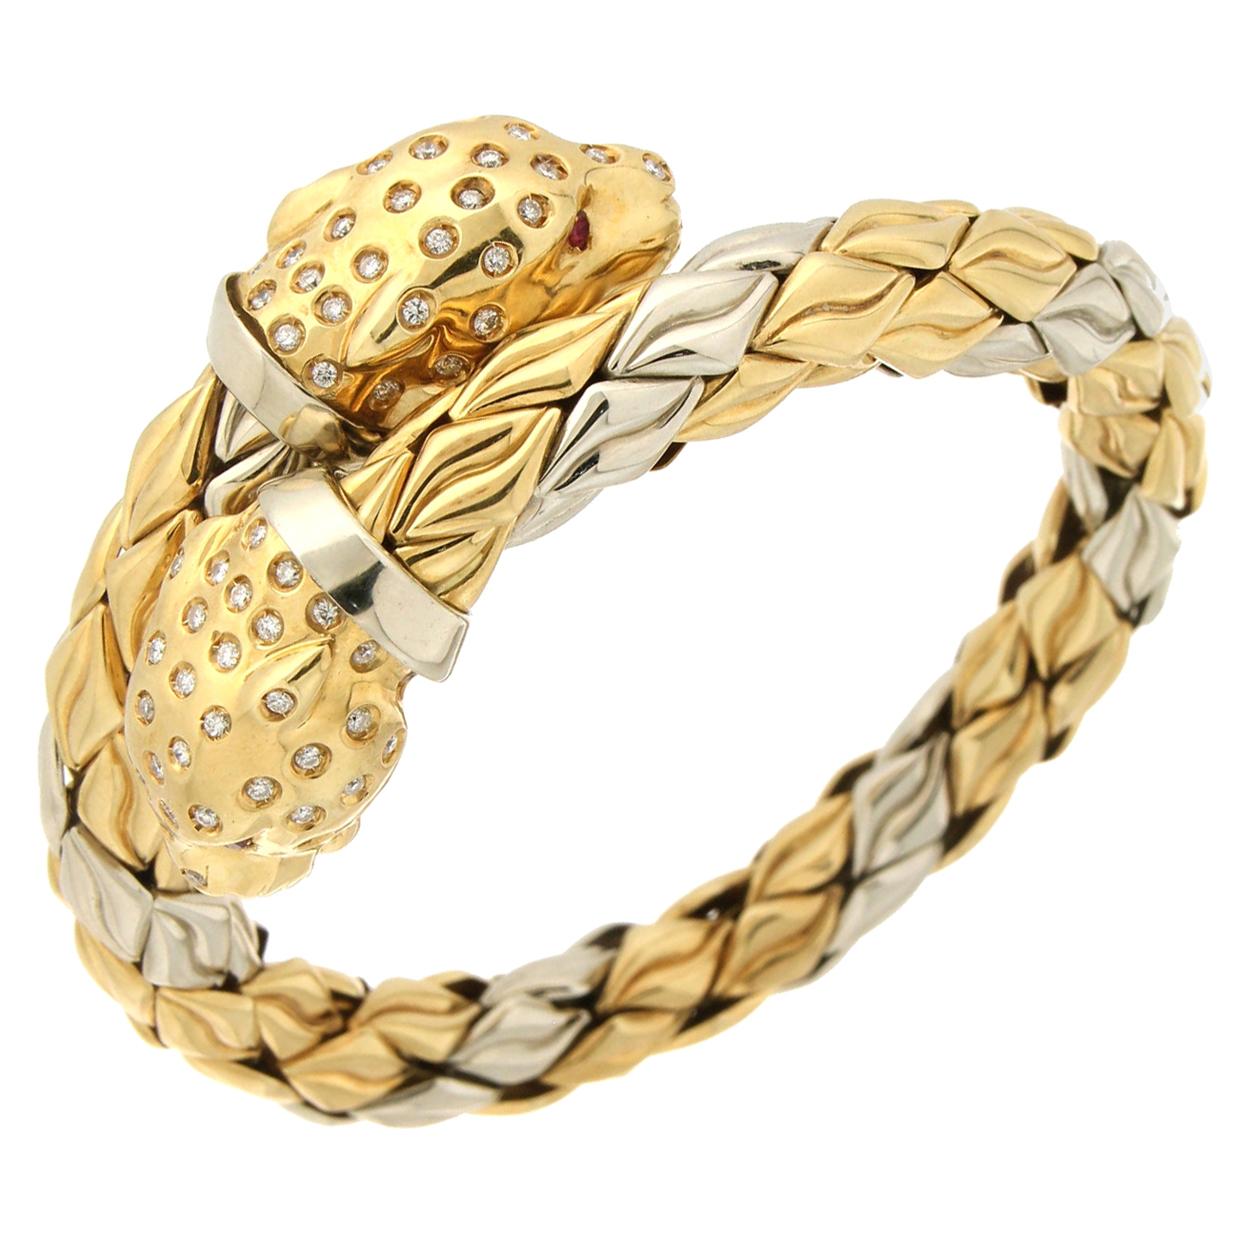 Chimento Italy 18 Karat Yellow and White Gold Diamonds Bangle Bracelet